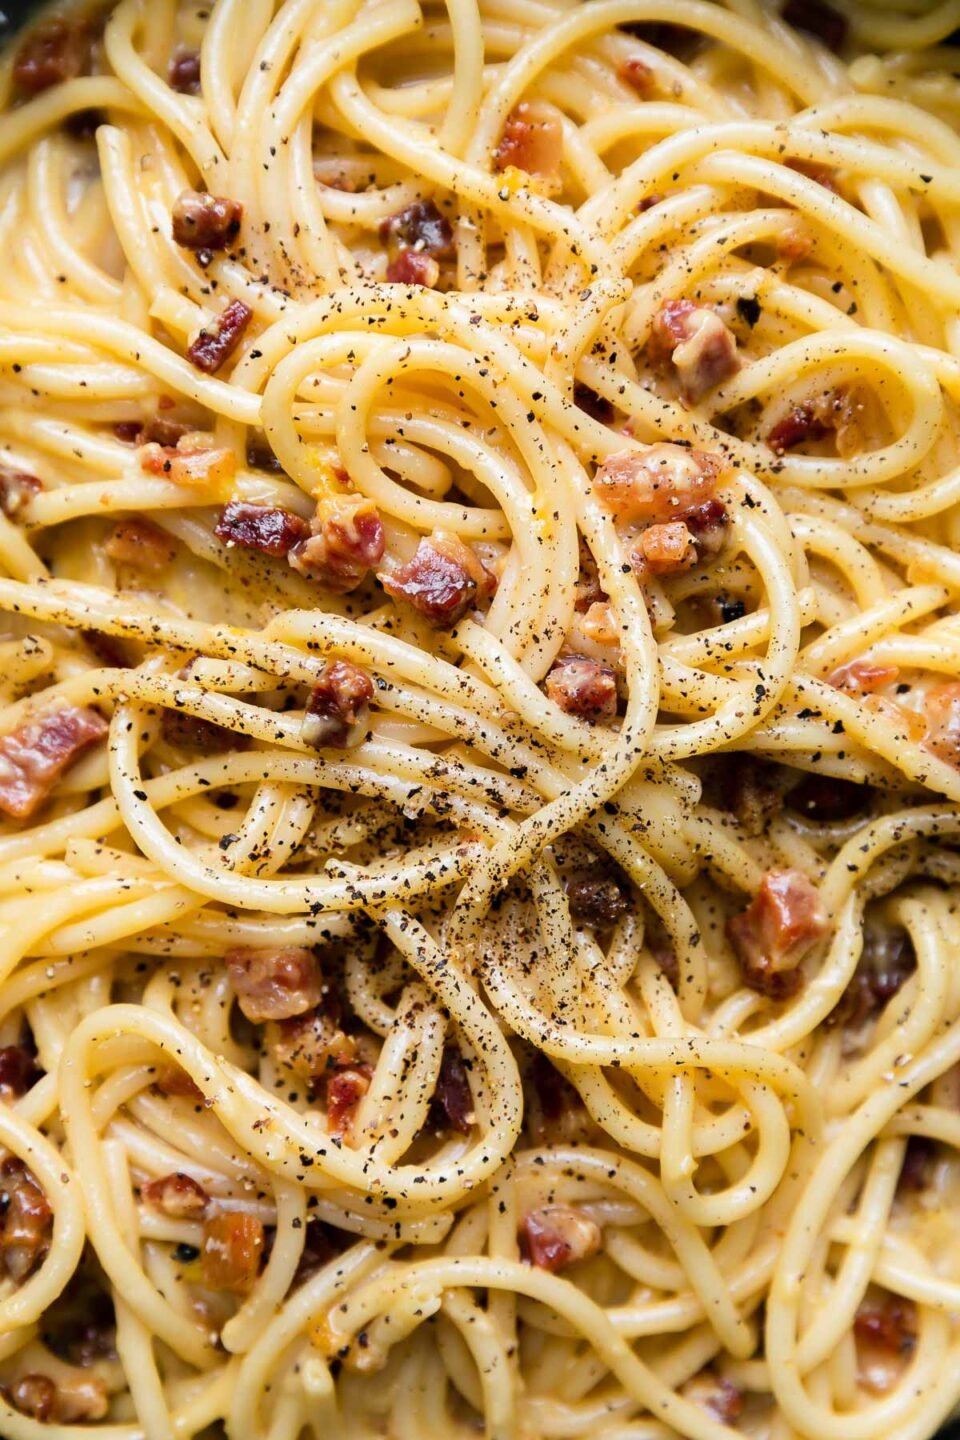 A close up shot of finished pasta carbonara garnished with ground black pepper.